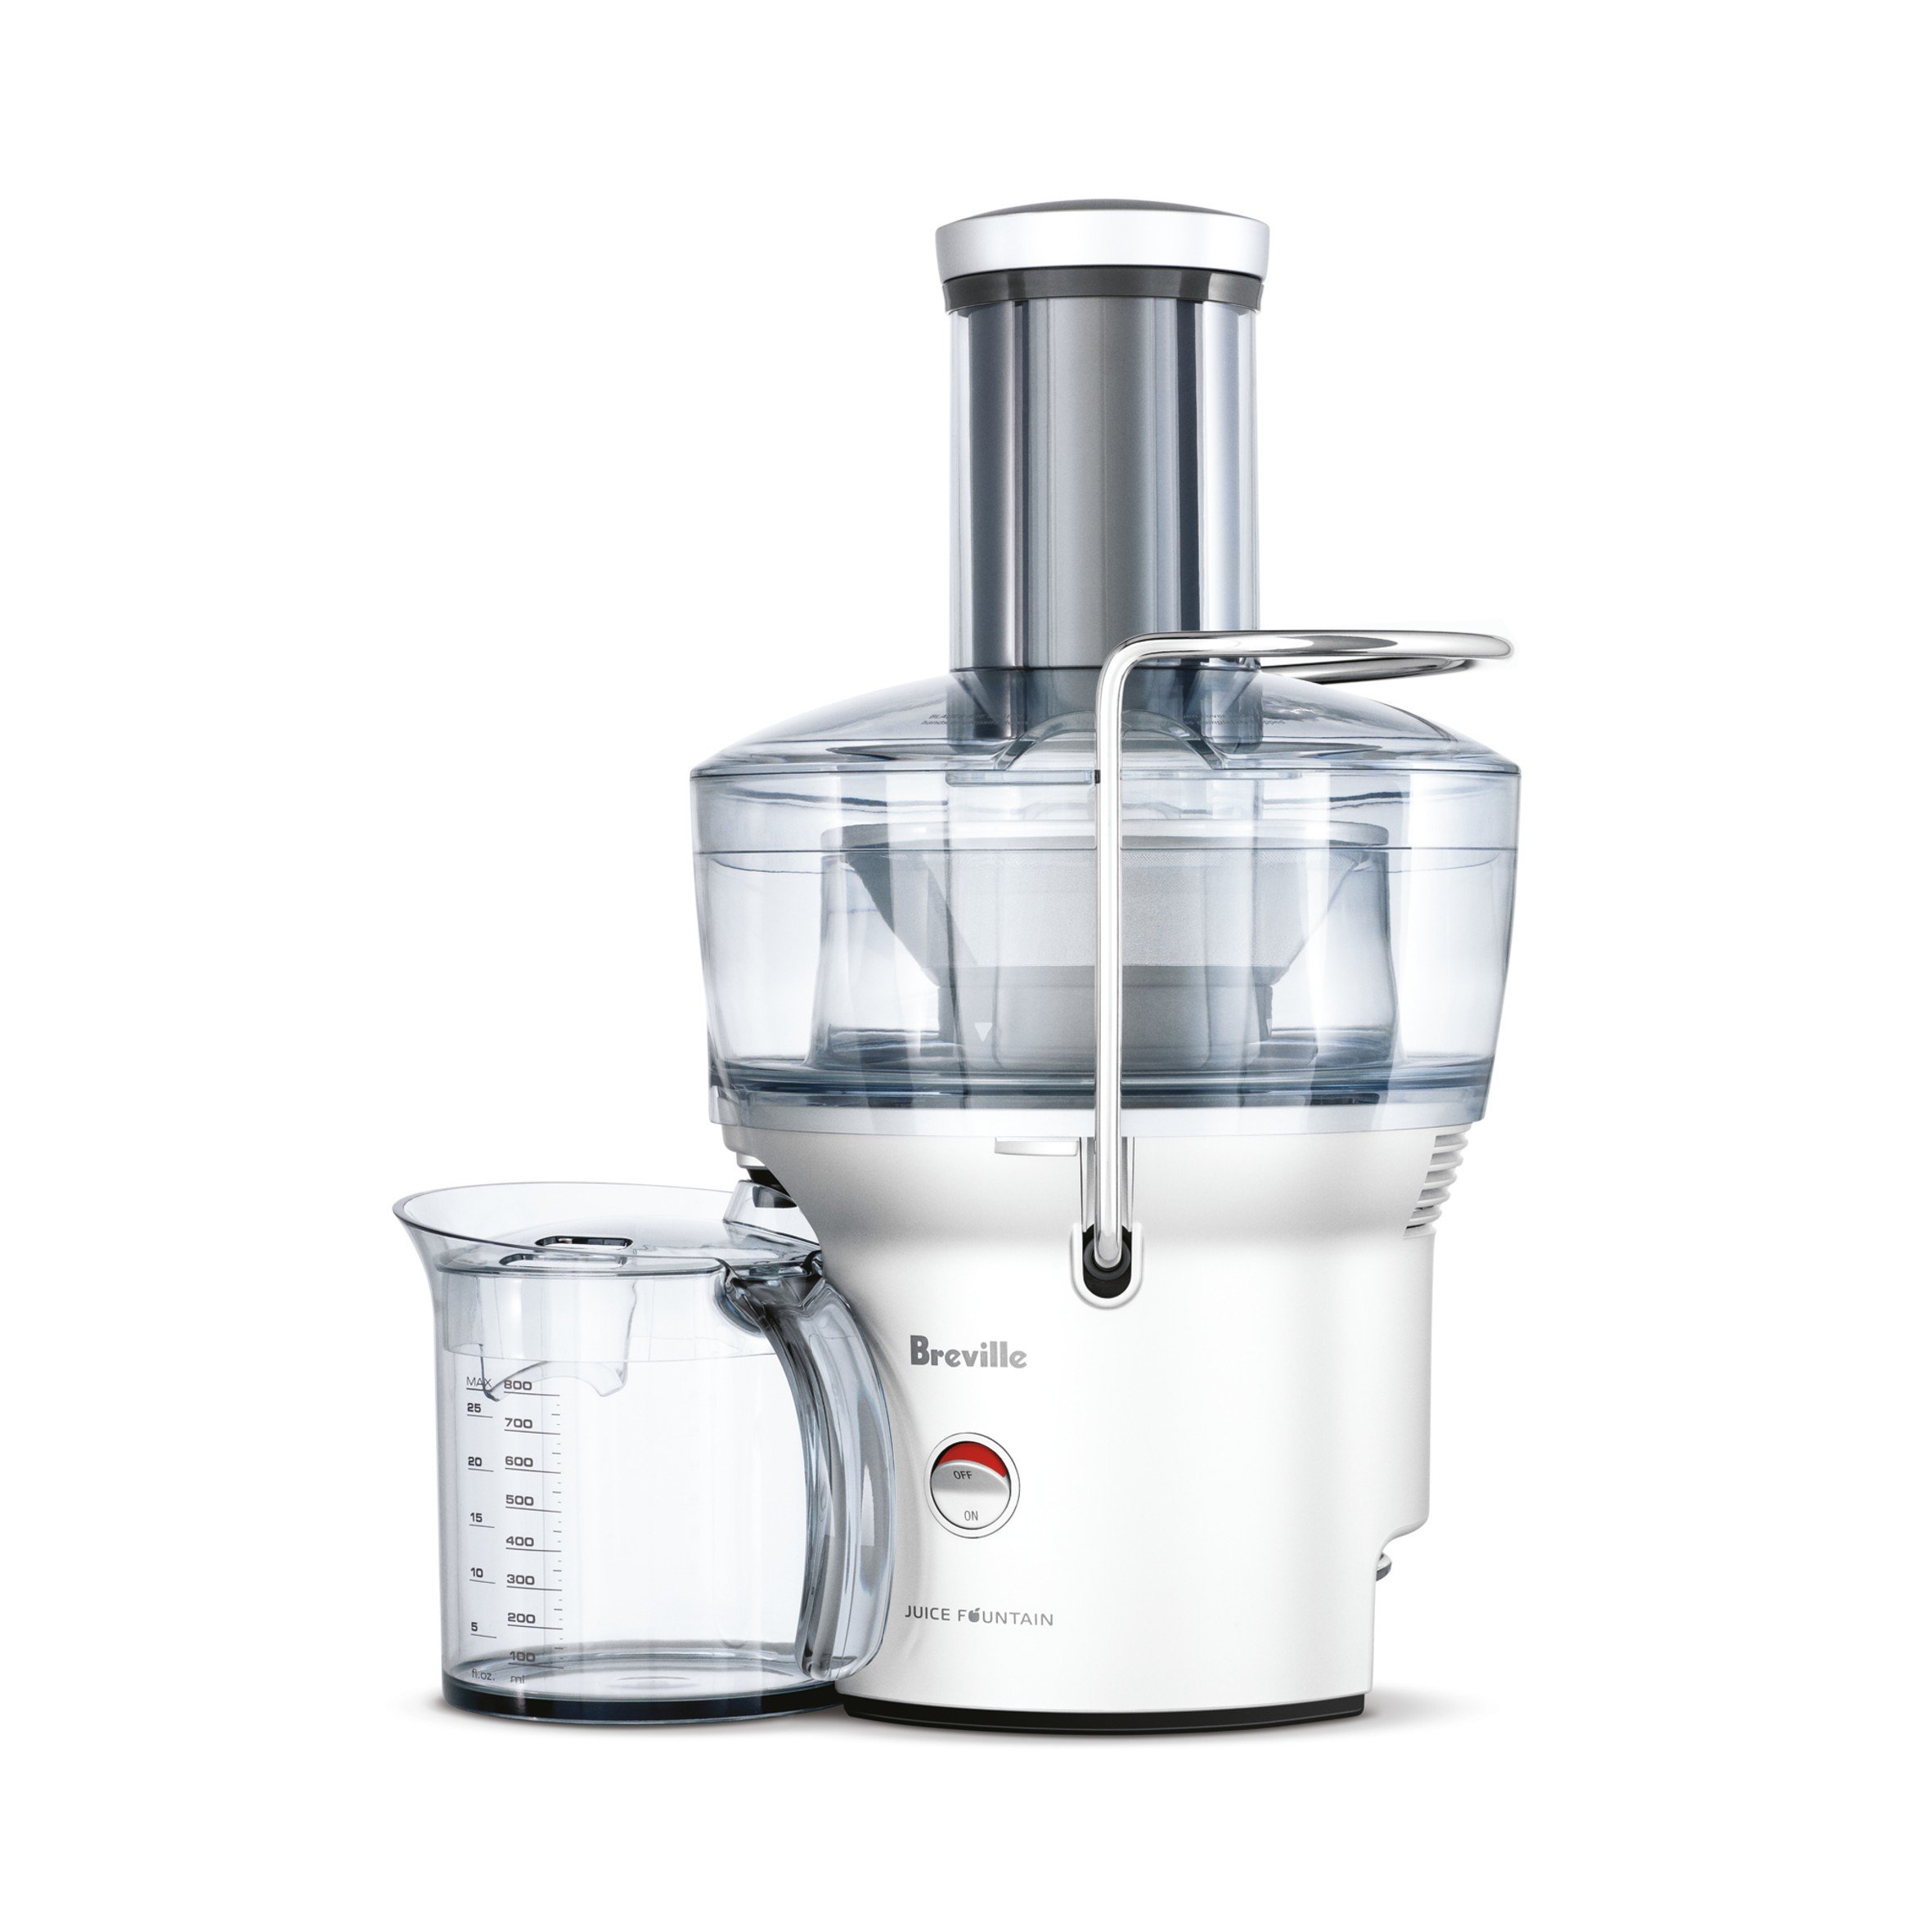 breville-bje200-juice-fountain-juicer-reviews-appliances-online